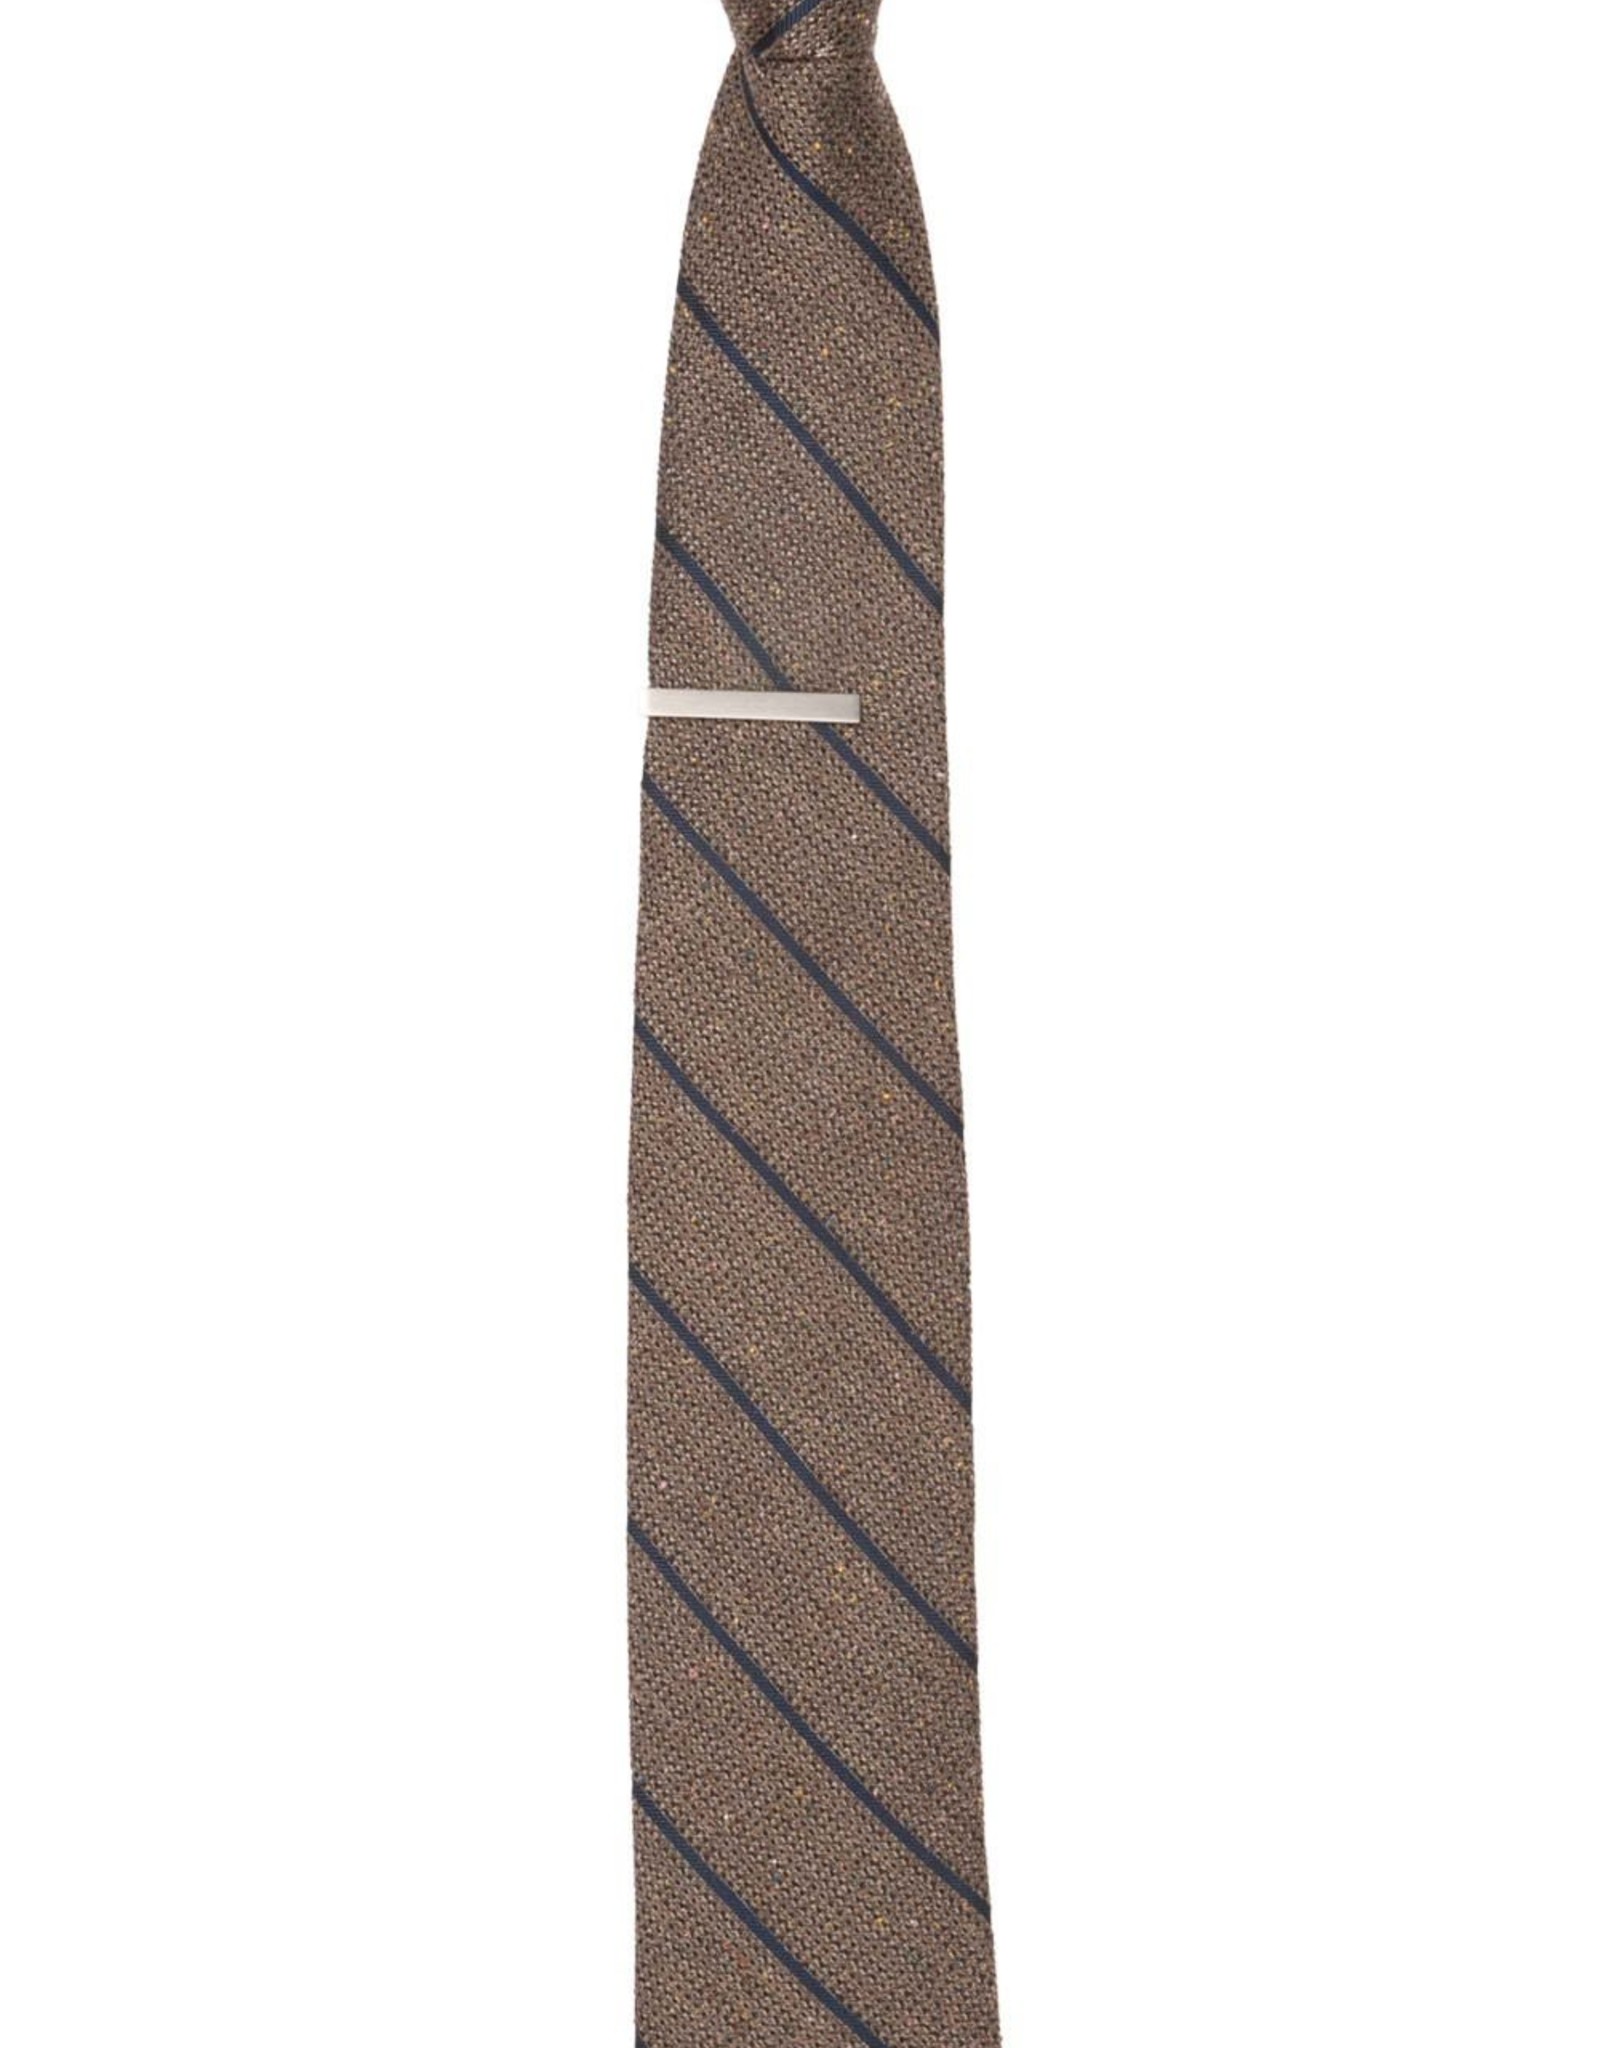 Decruise Stripe Tie